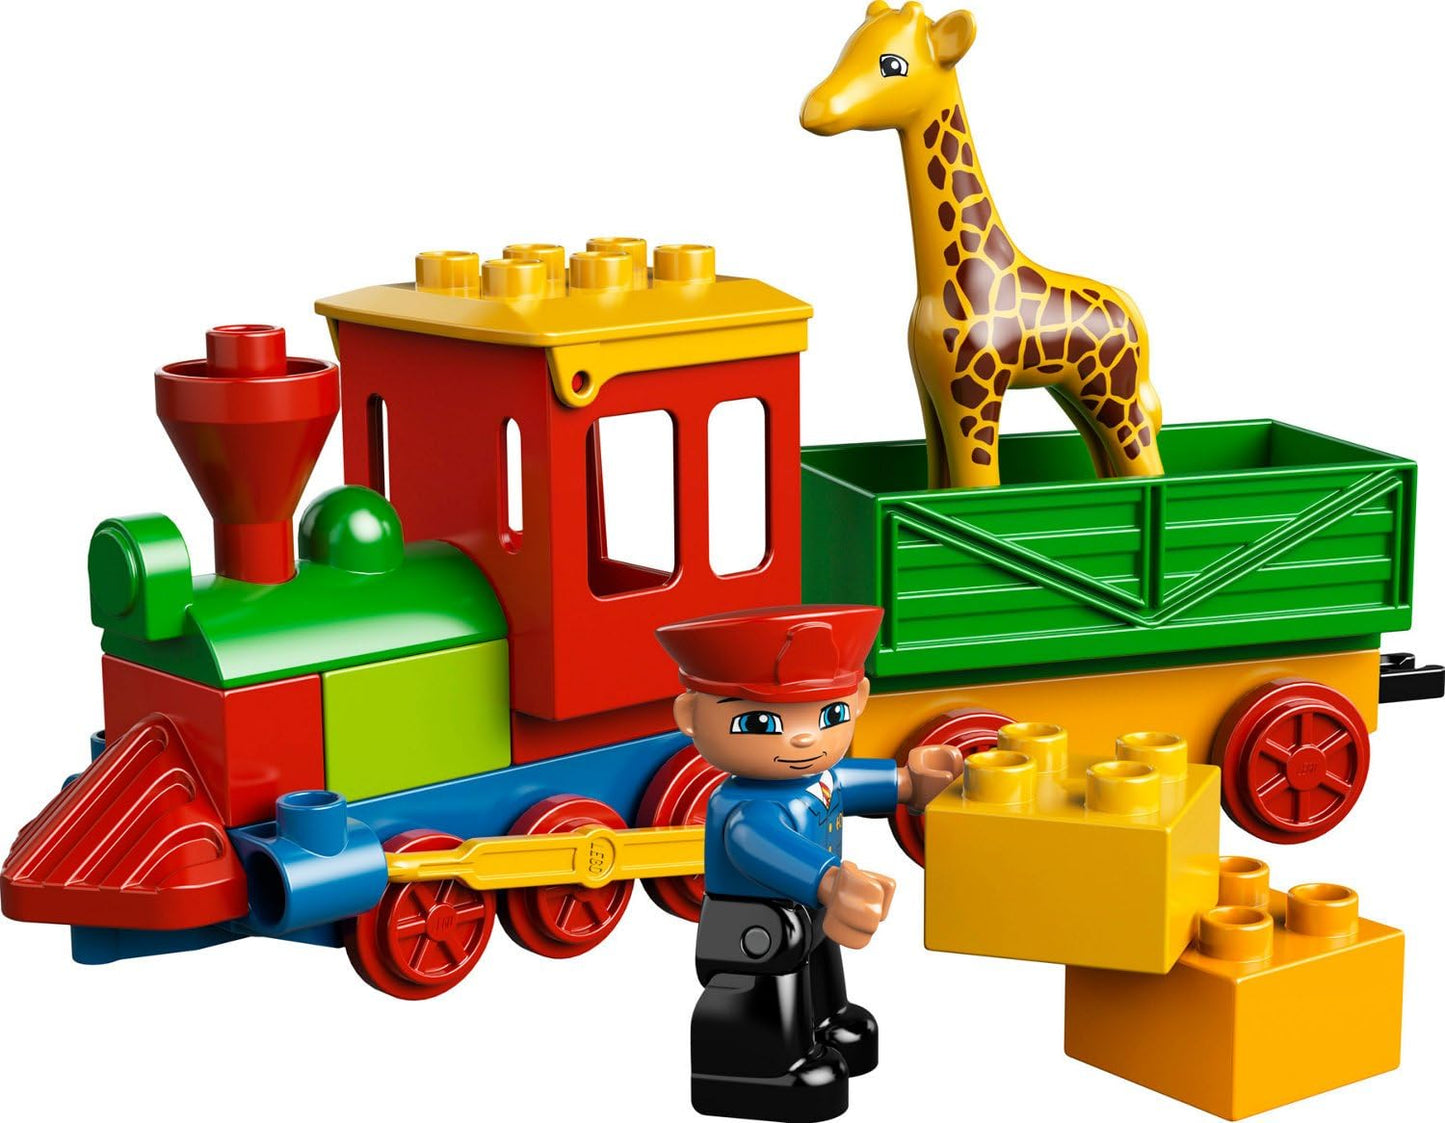 LEGO DUPLO LEGOville 6144 Zoo Train Toy